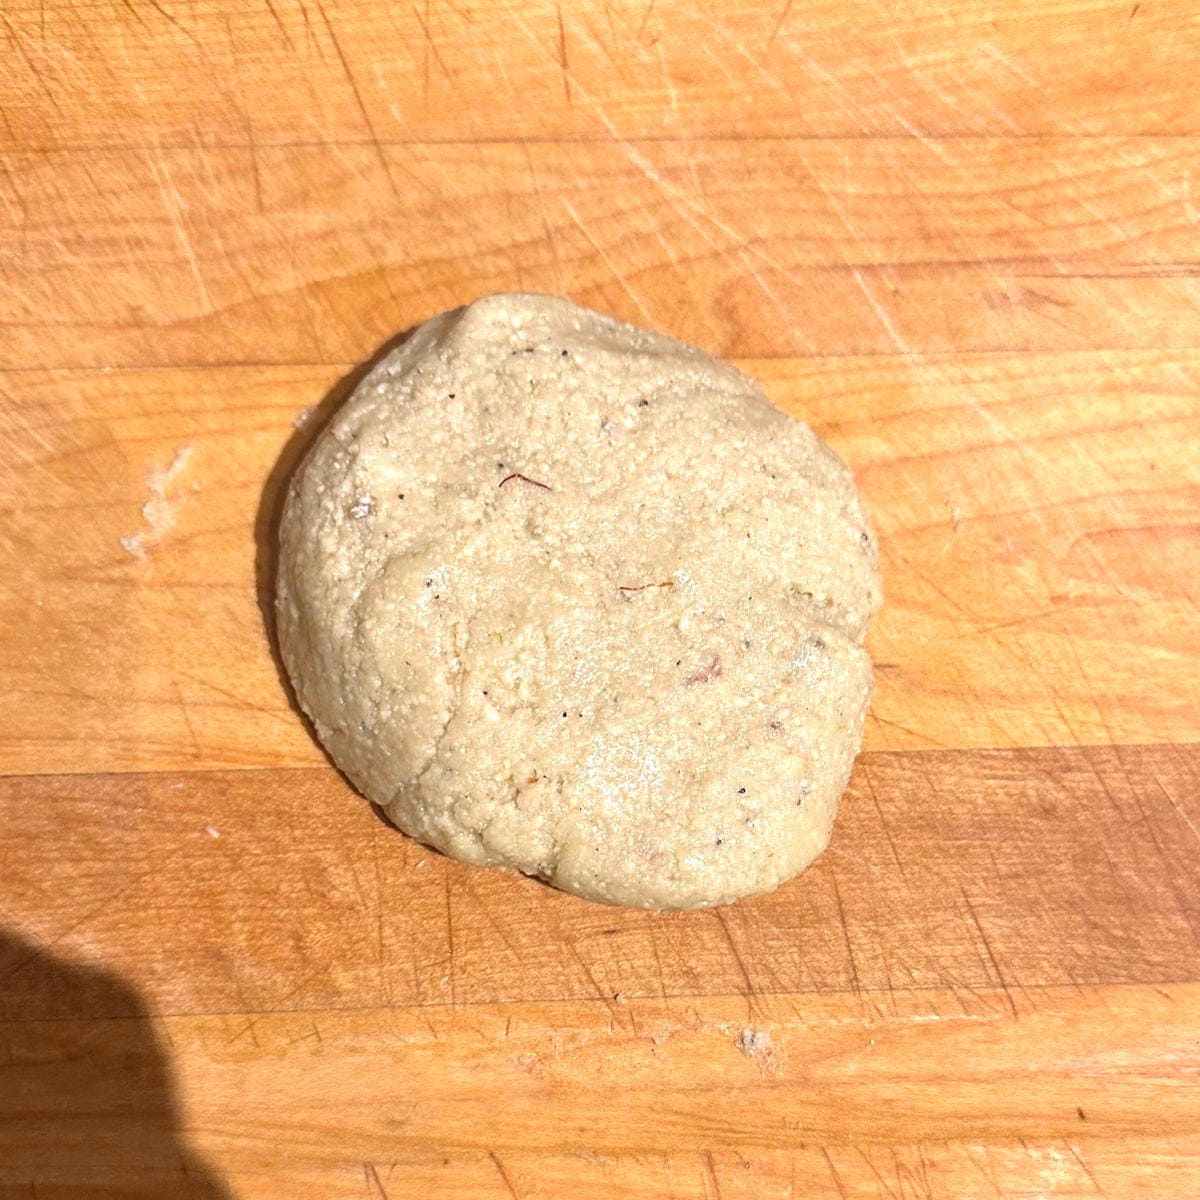 Kaju katli dough kneaded on wooden board.